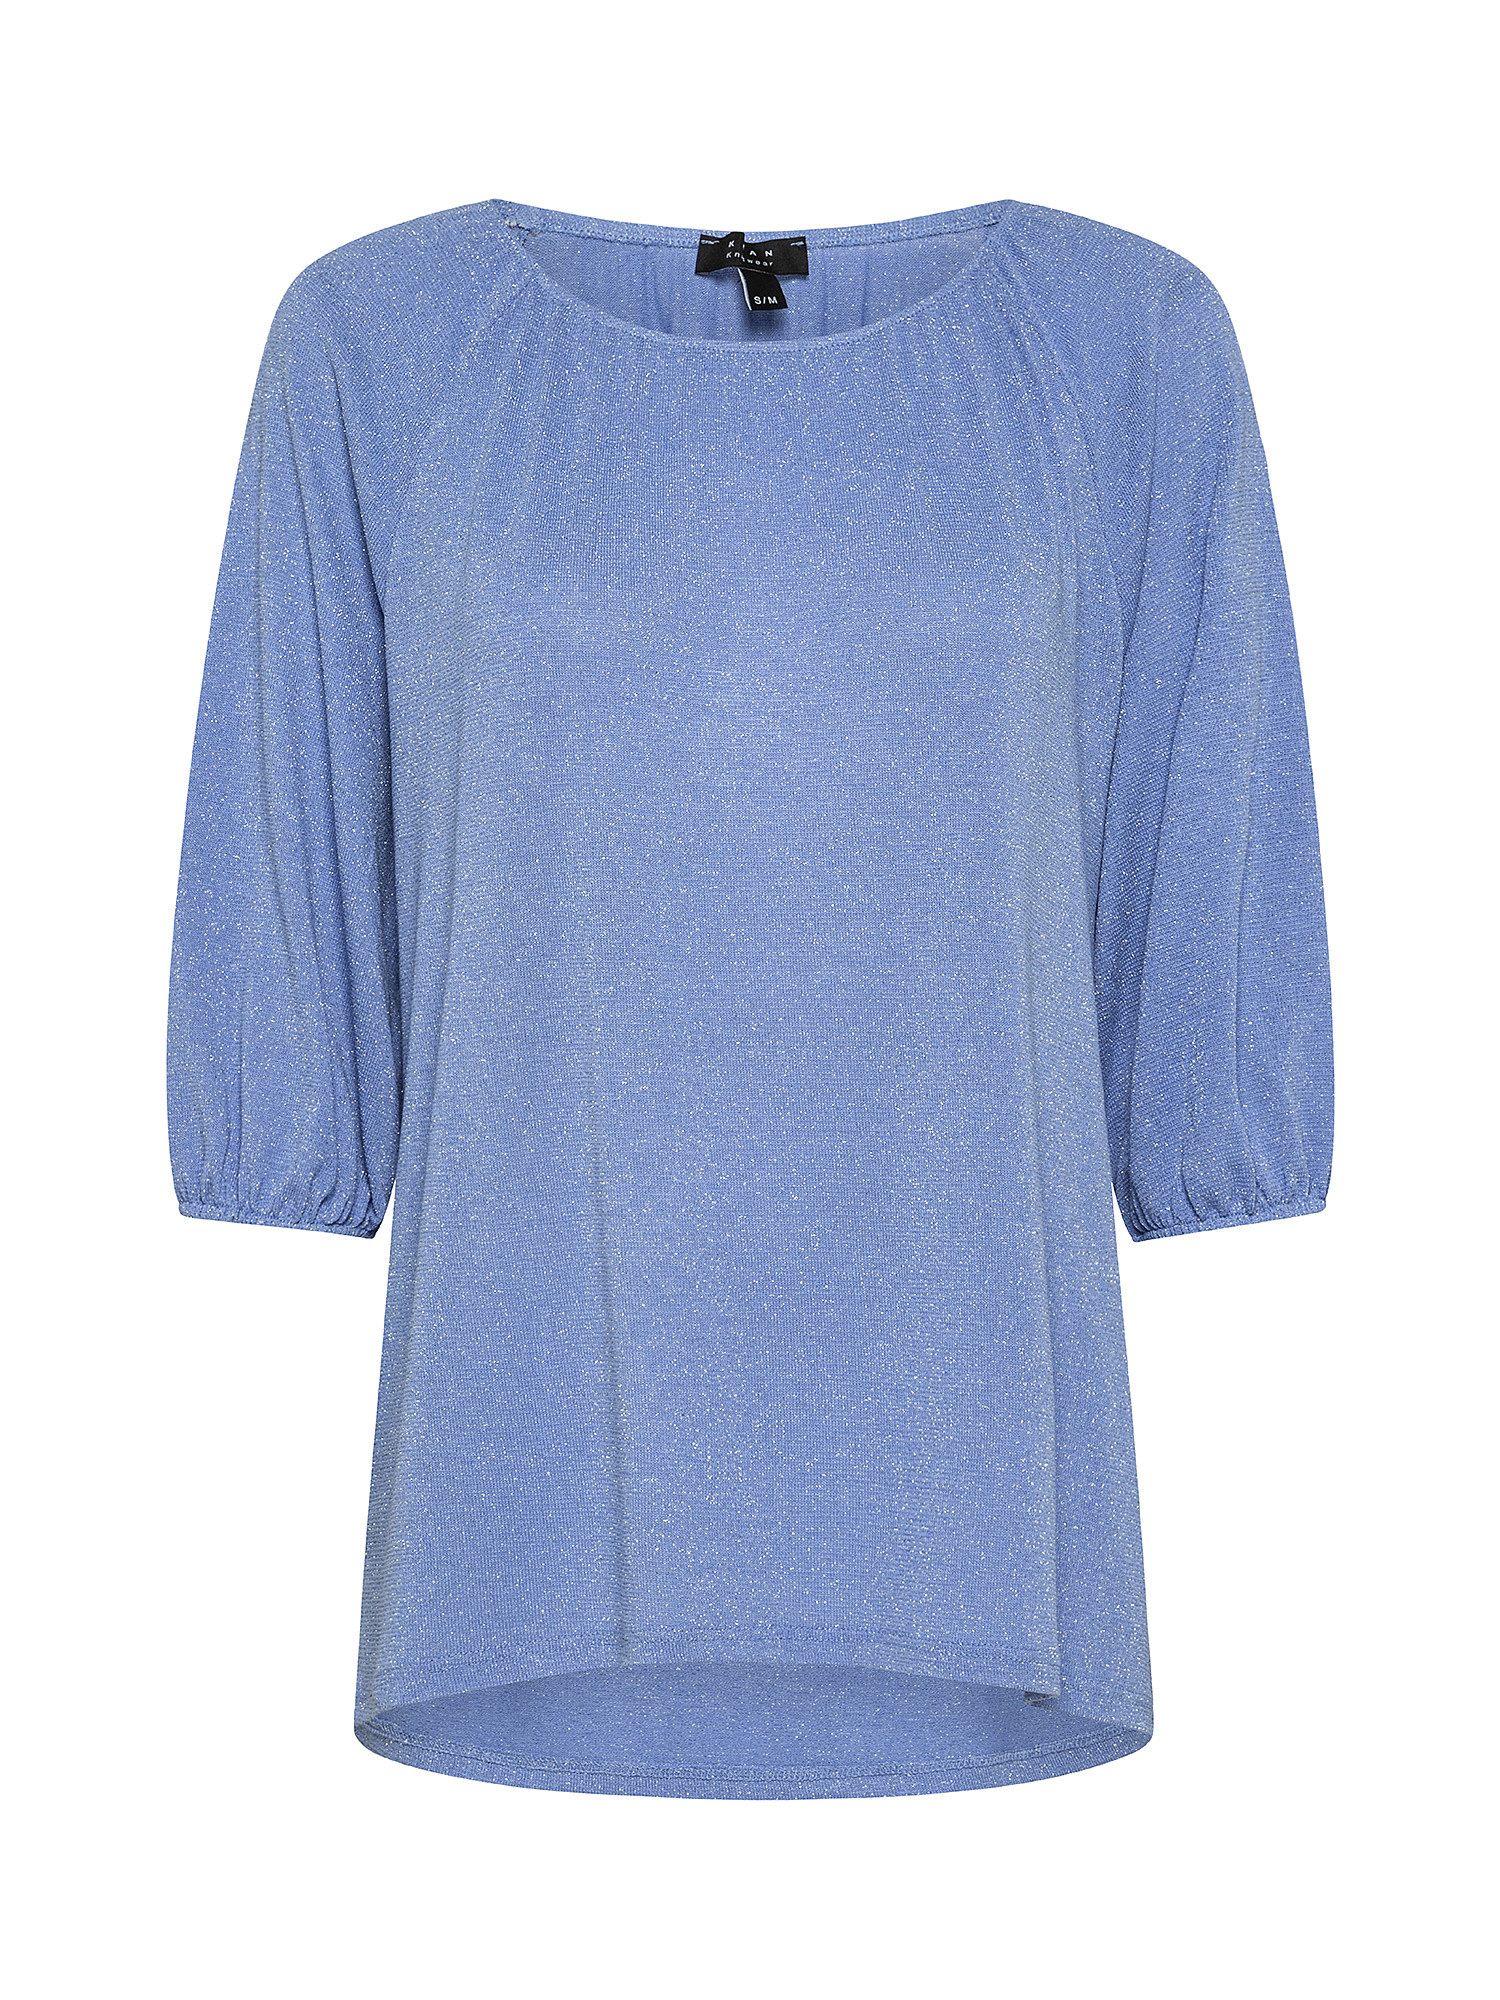 T-shirt con manica raglan, Azzurro celeste, large image number 0